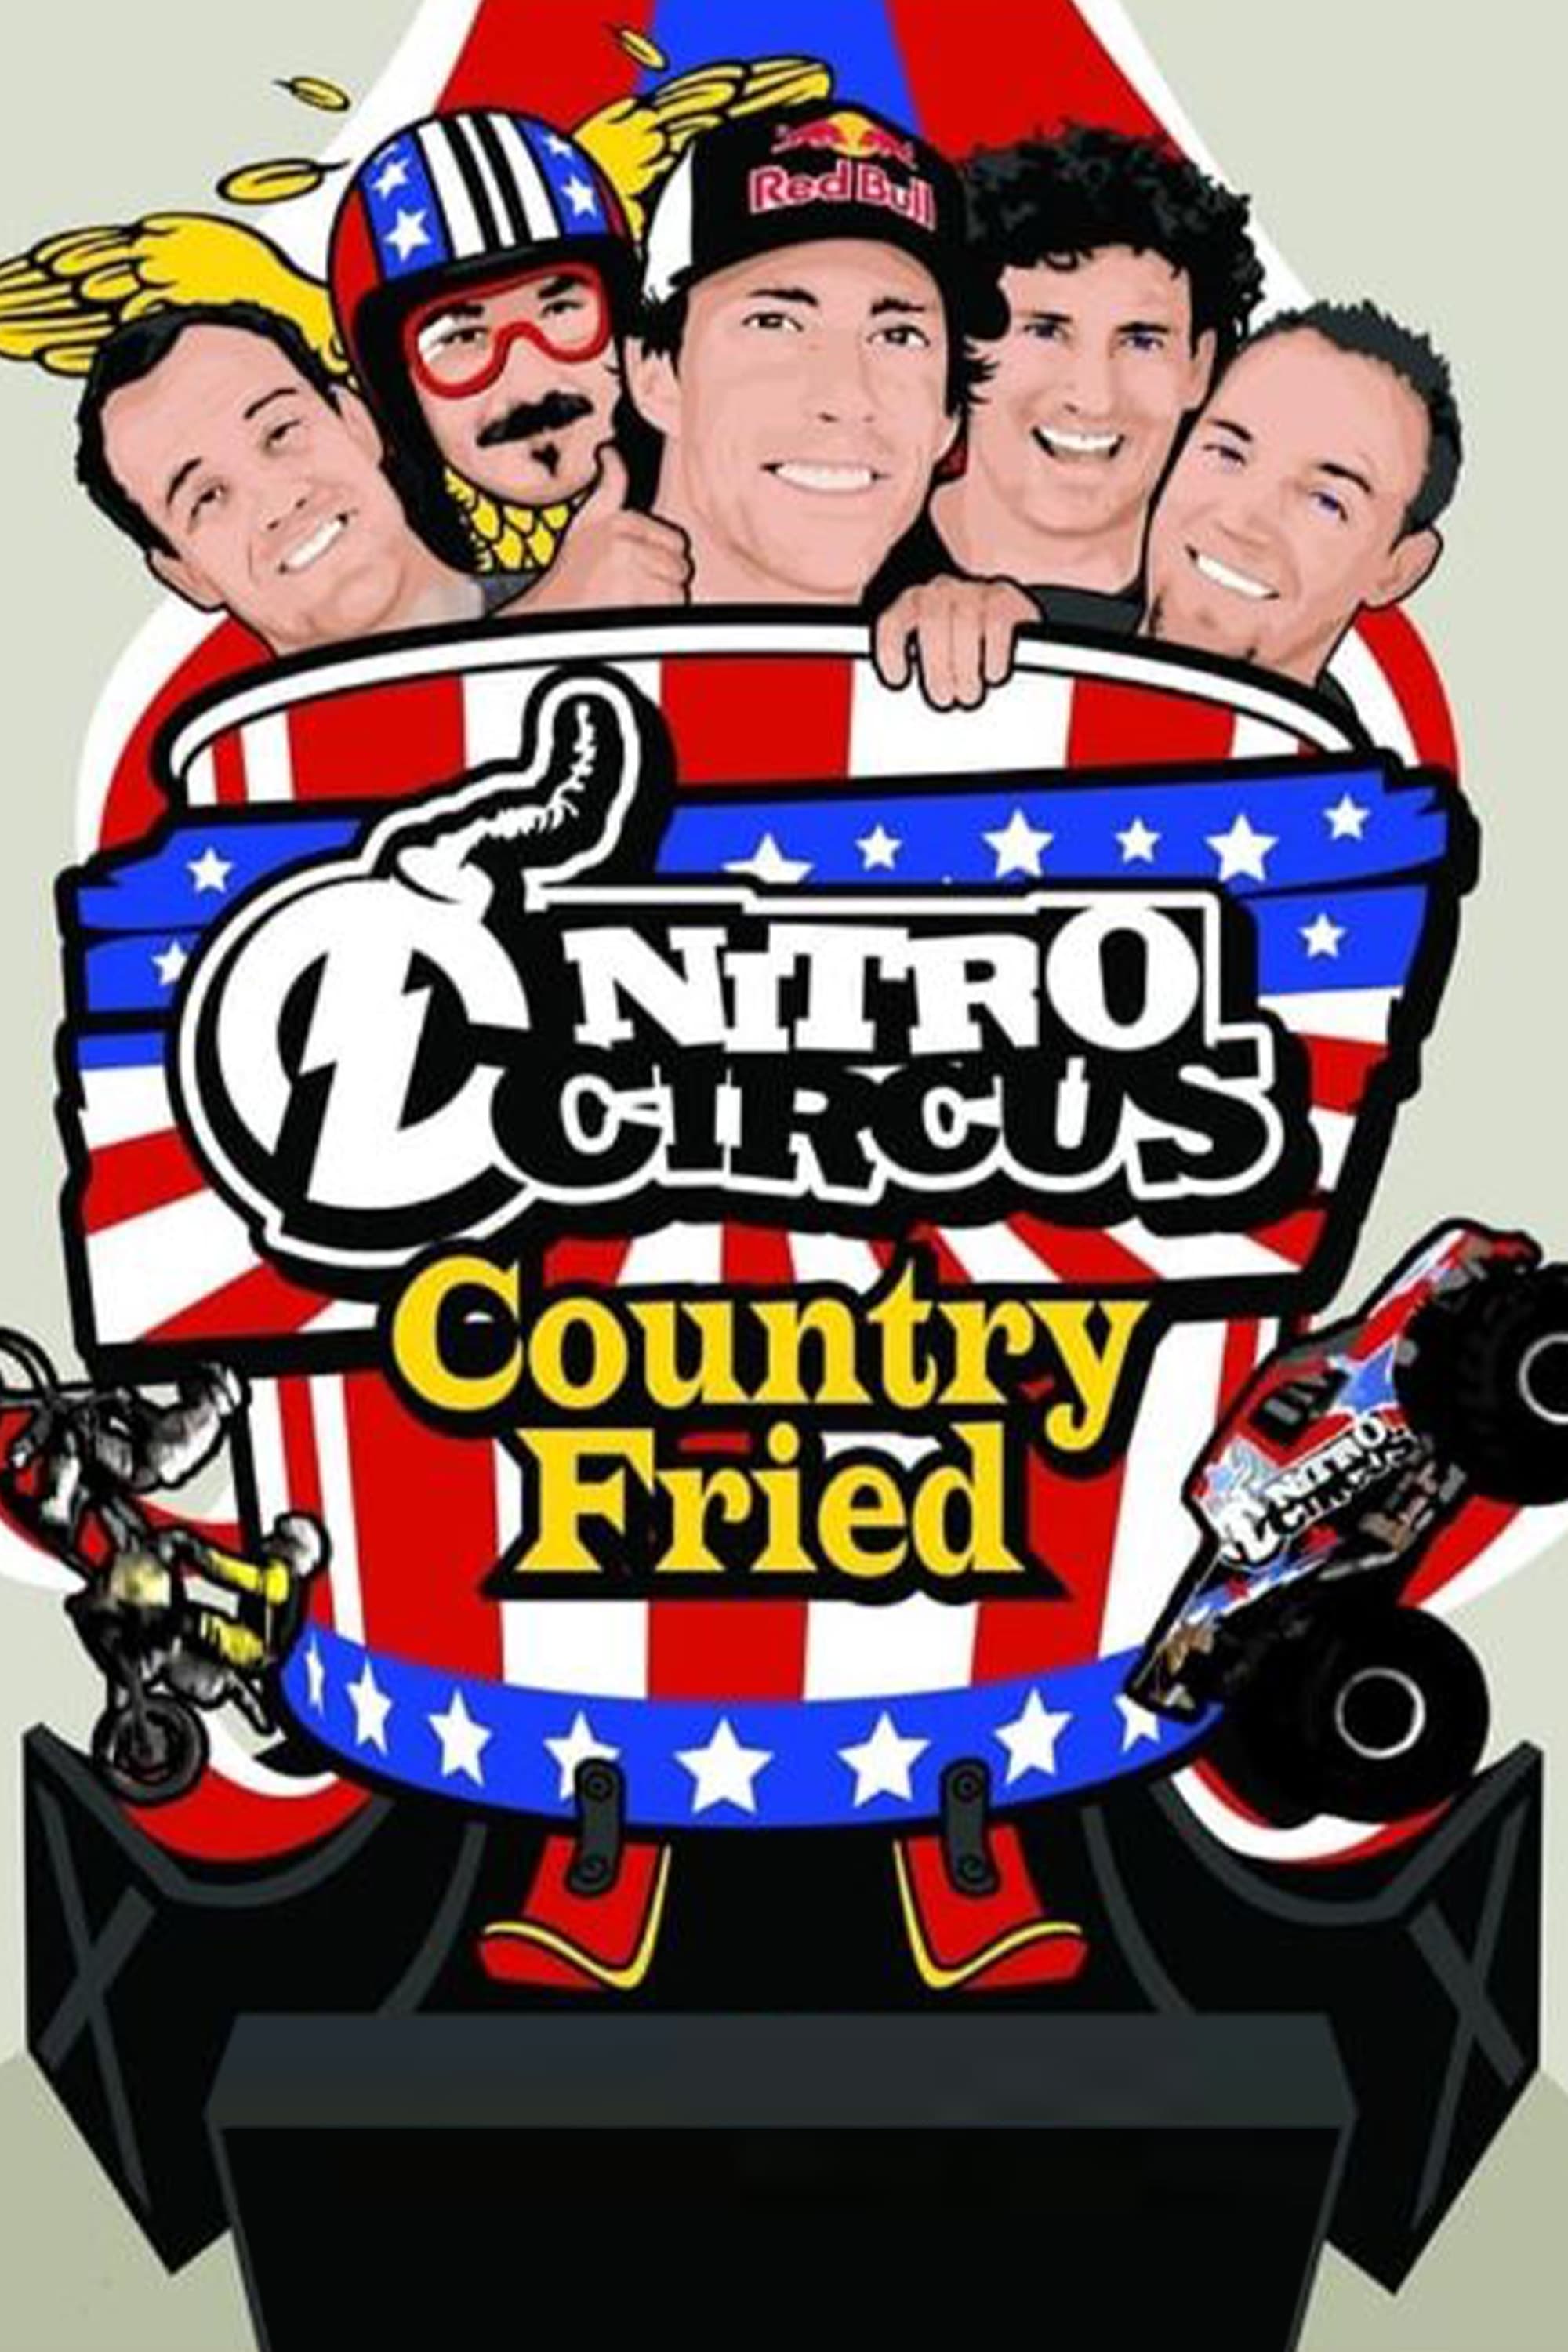 Nitro Circus 7 Country Fried